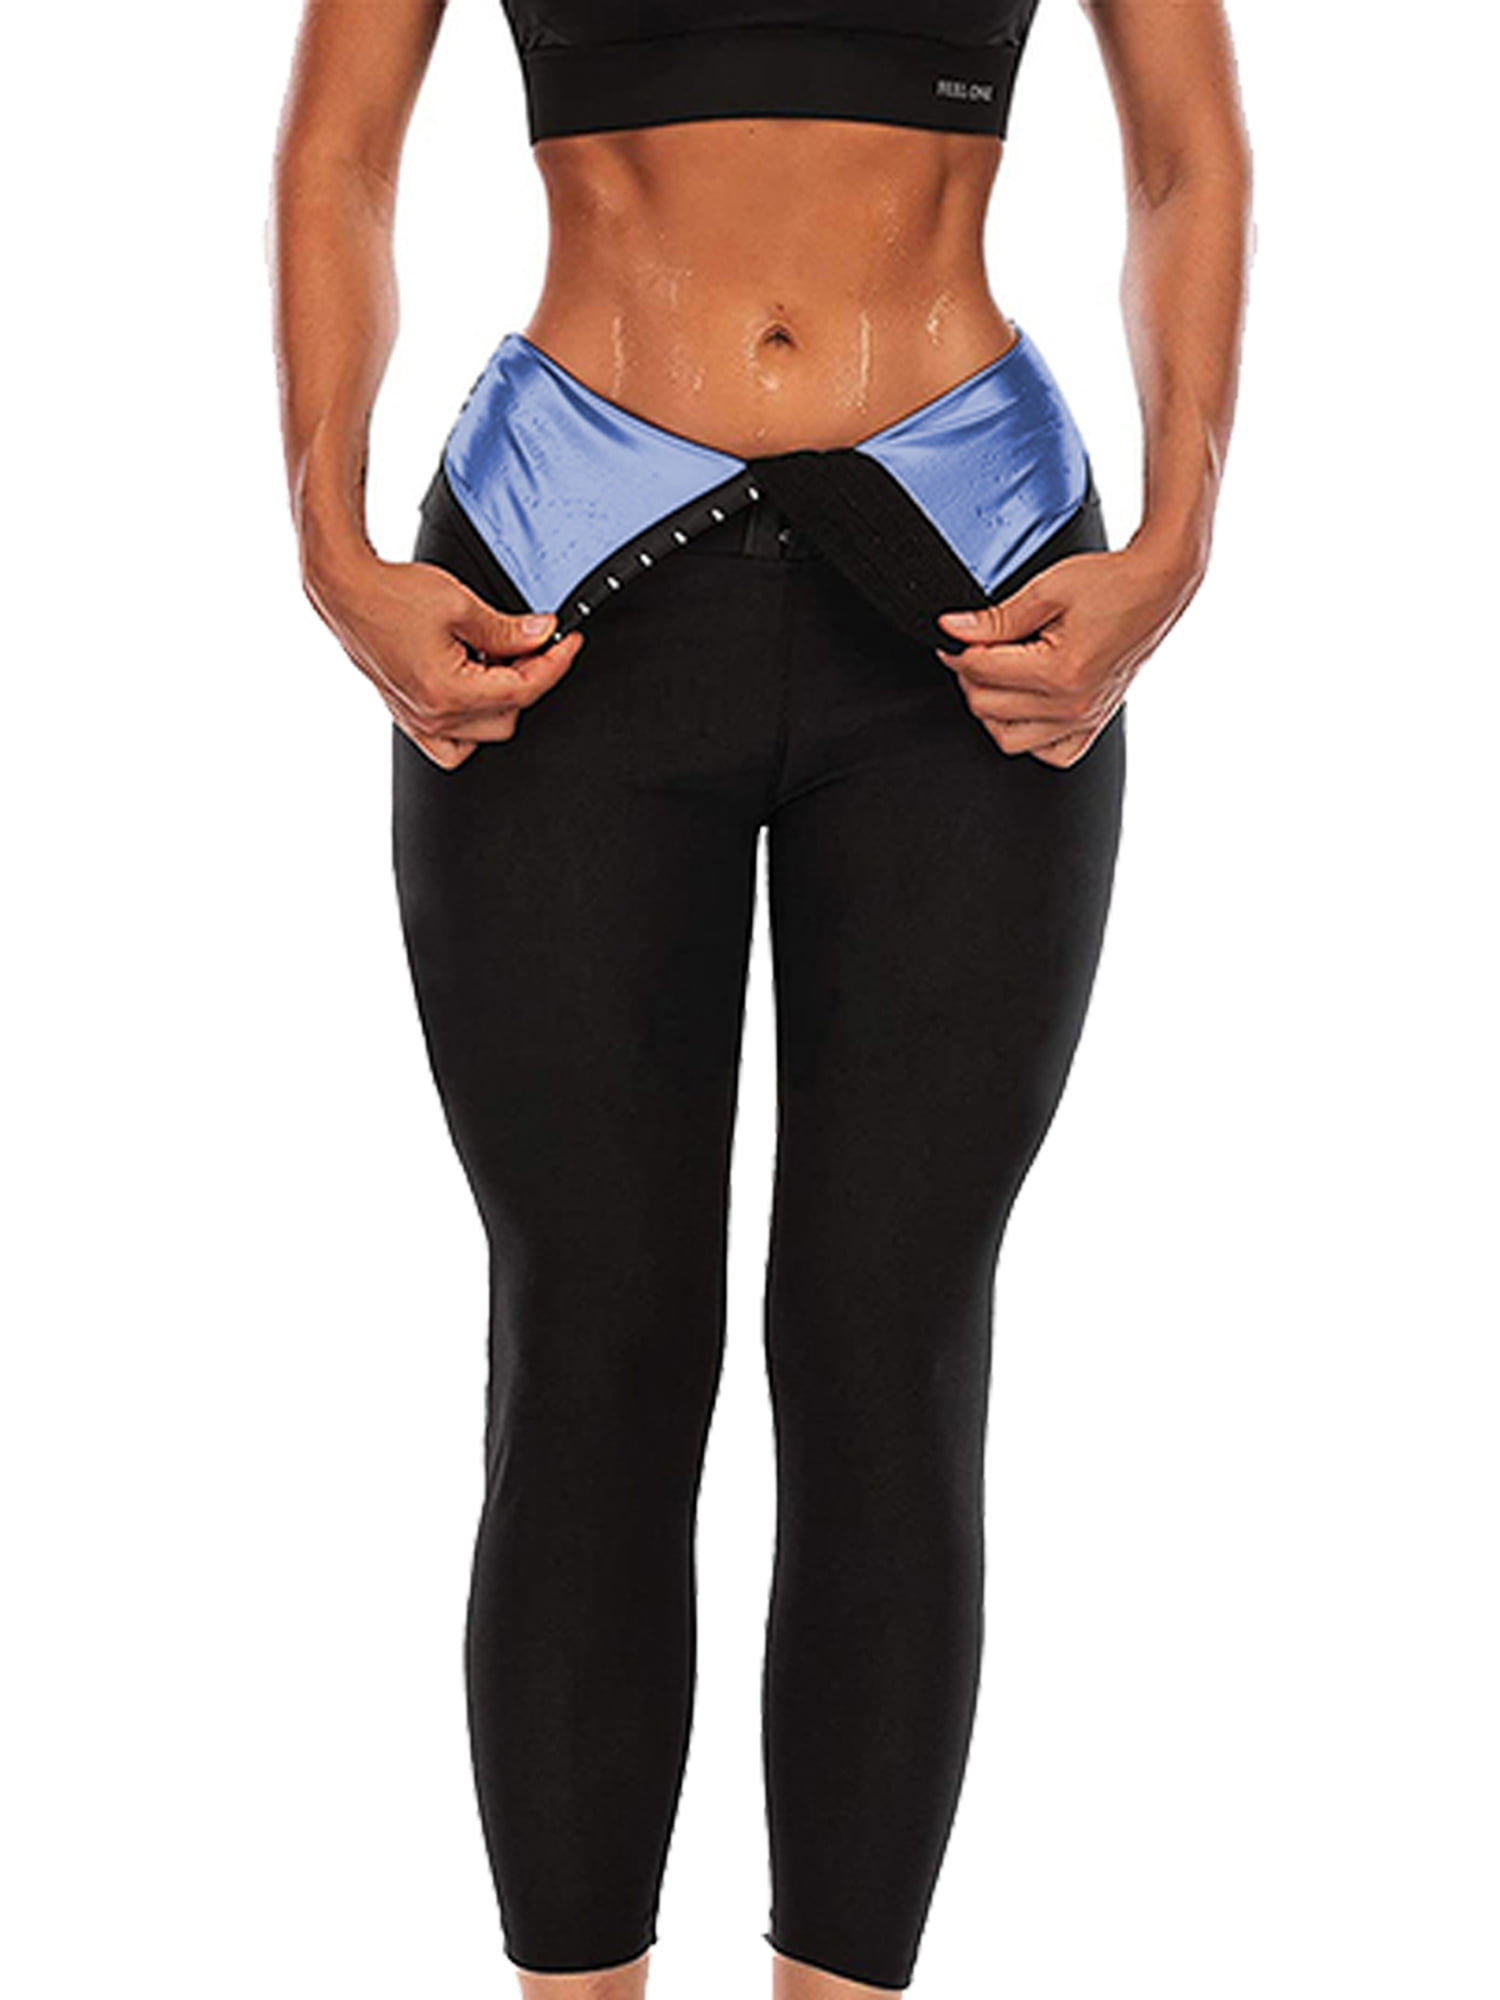 Workout Sauna Sweat Thermo Shorts Body Shaper Neoprene Athletic Yoga Pants Gym Z